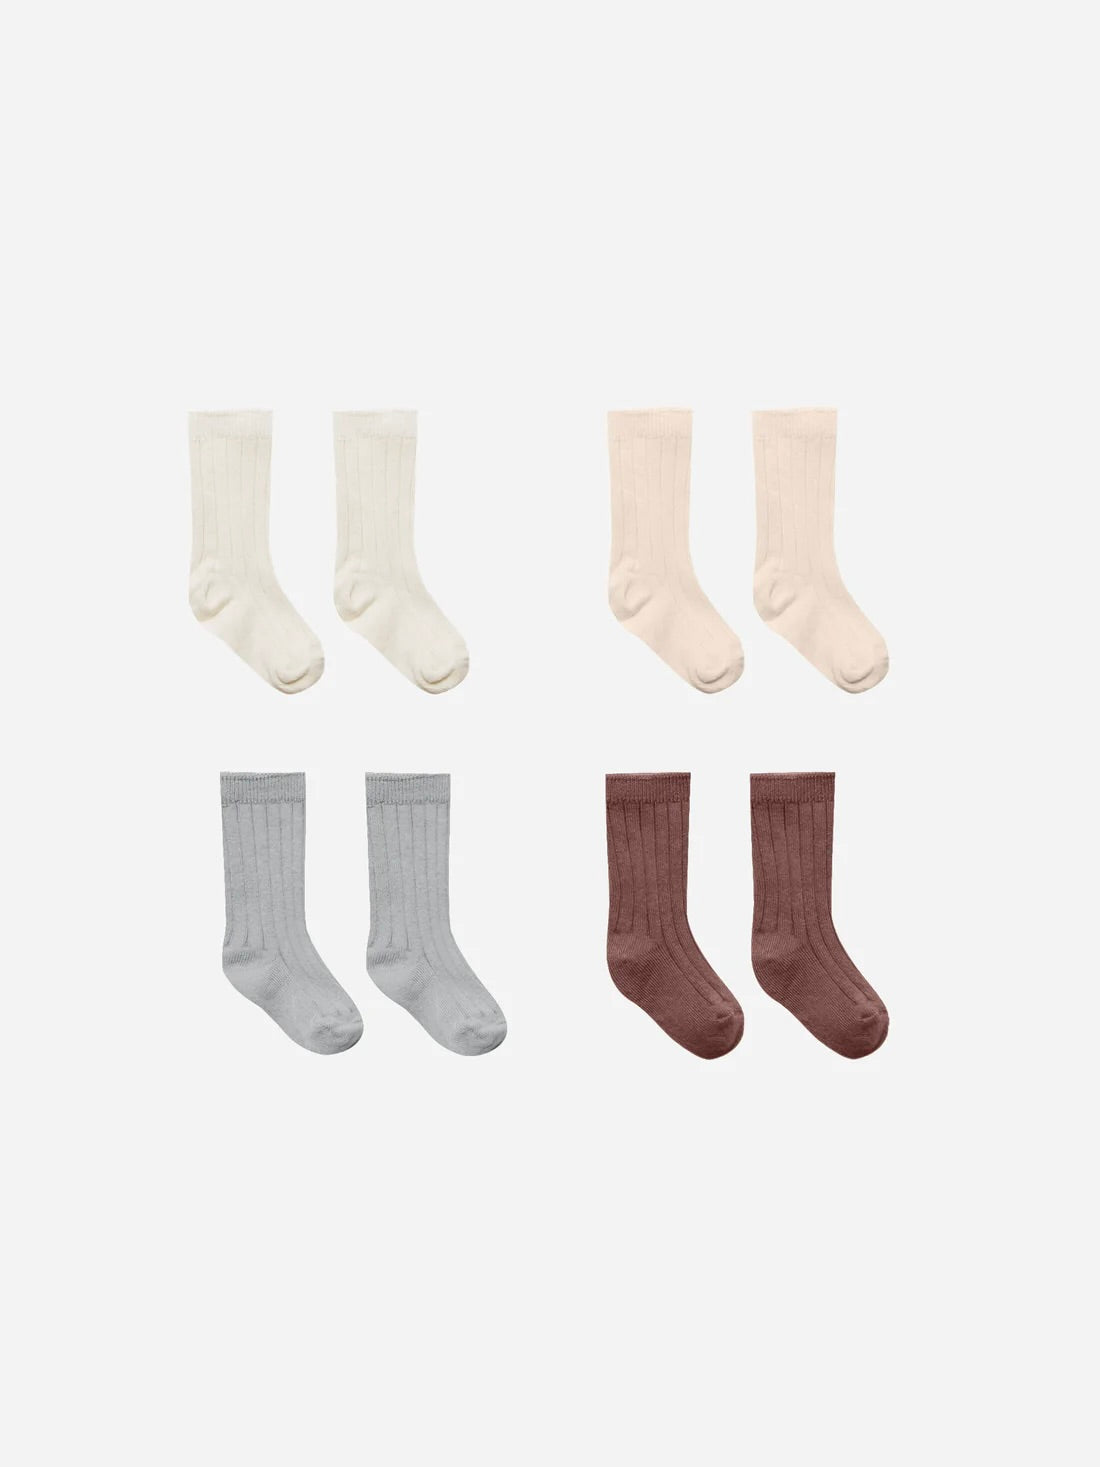 Socks- Set of 4